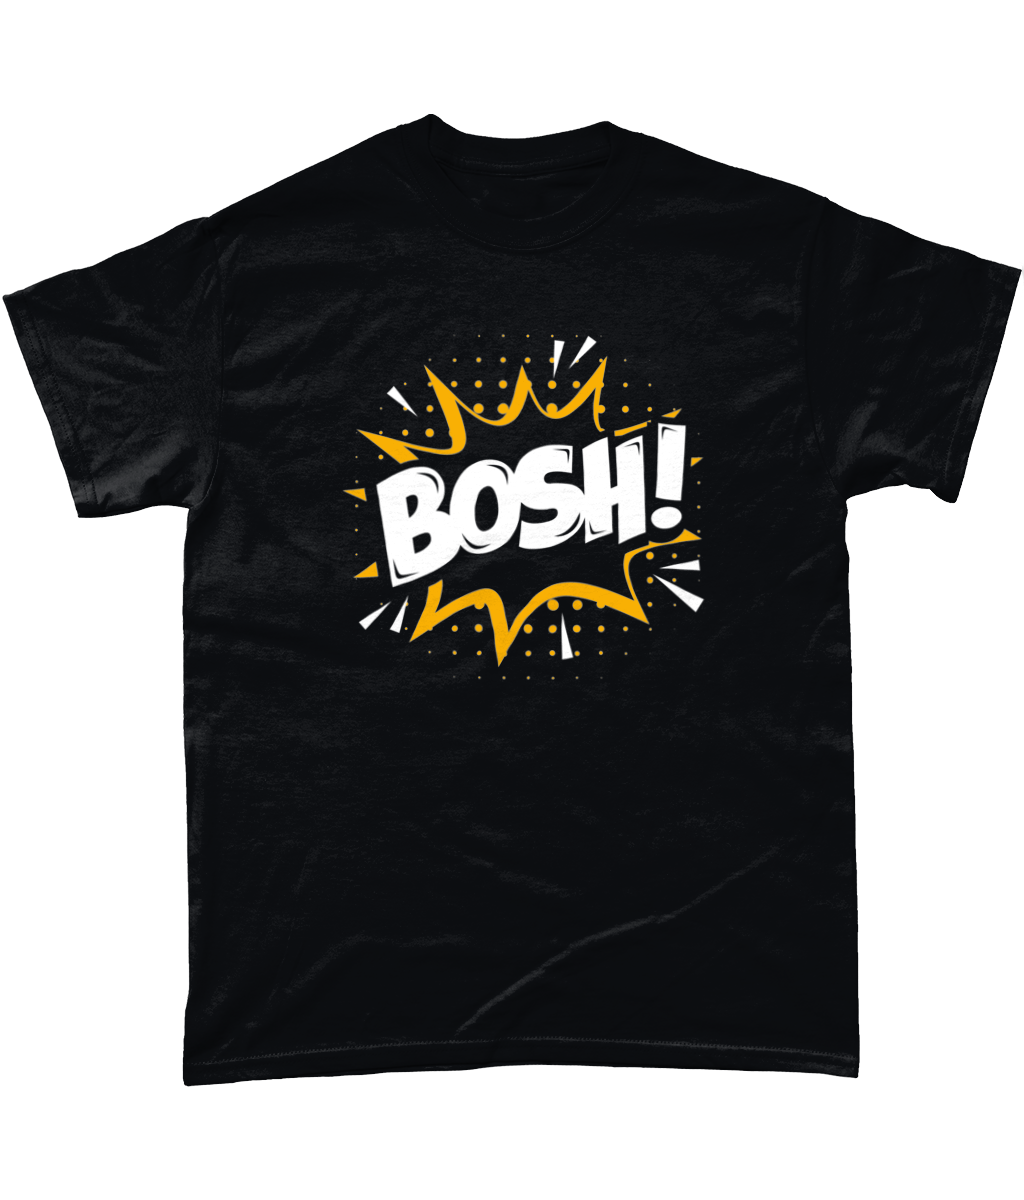 BOSH! (Limited Edition) Orange T-Shirt